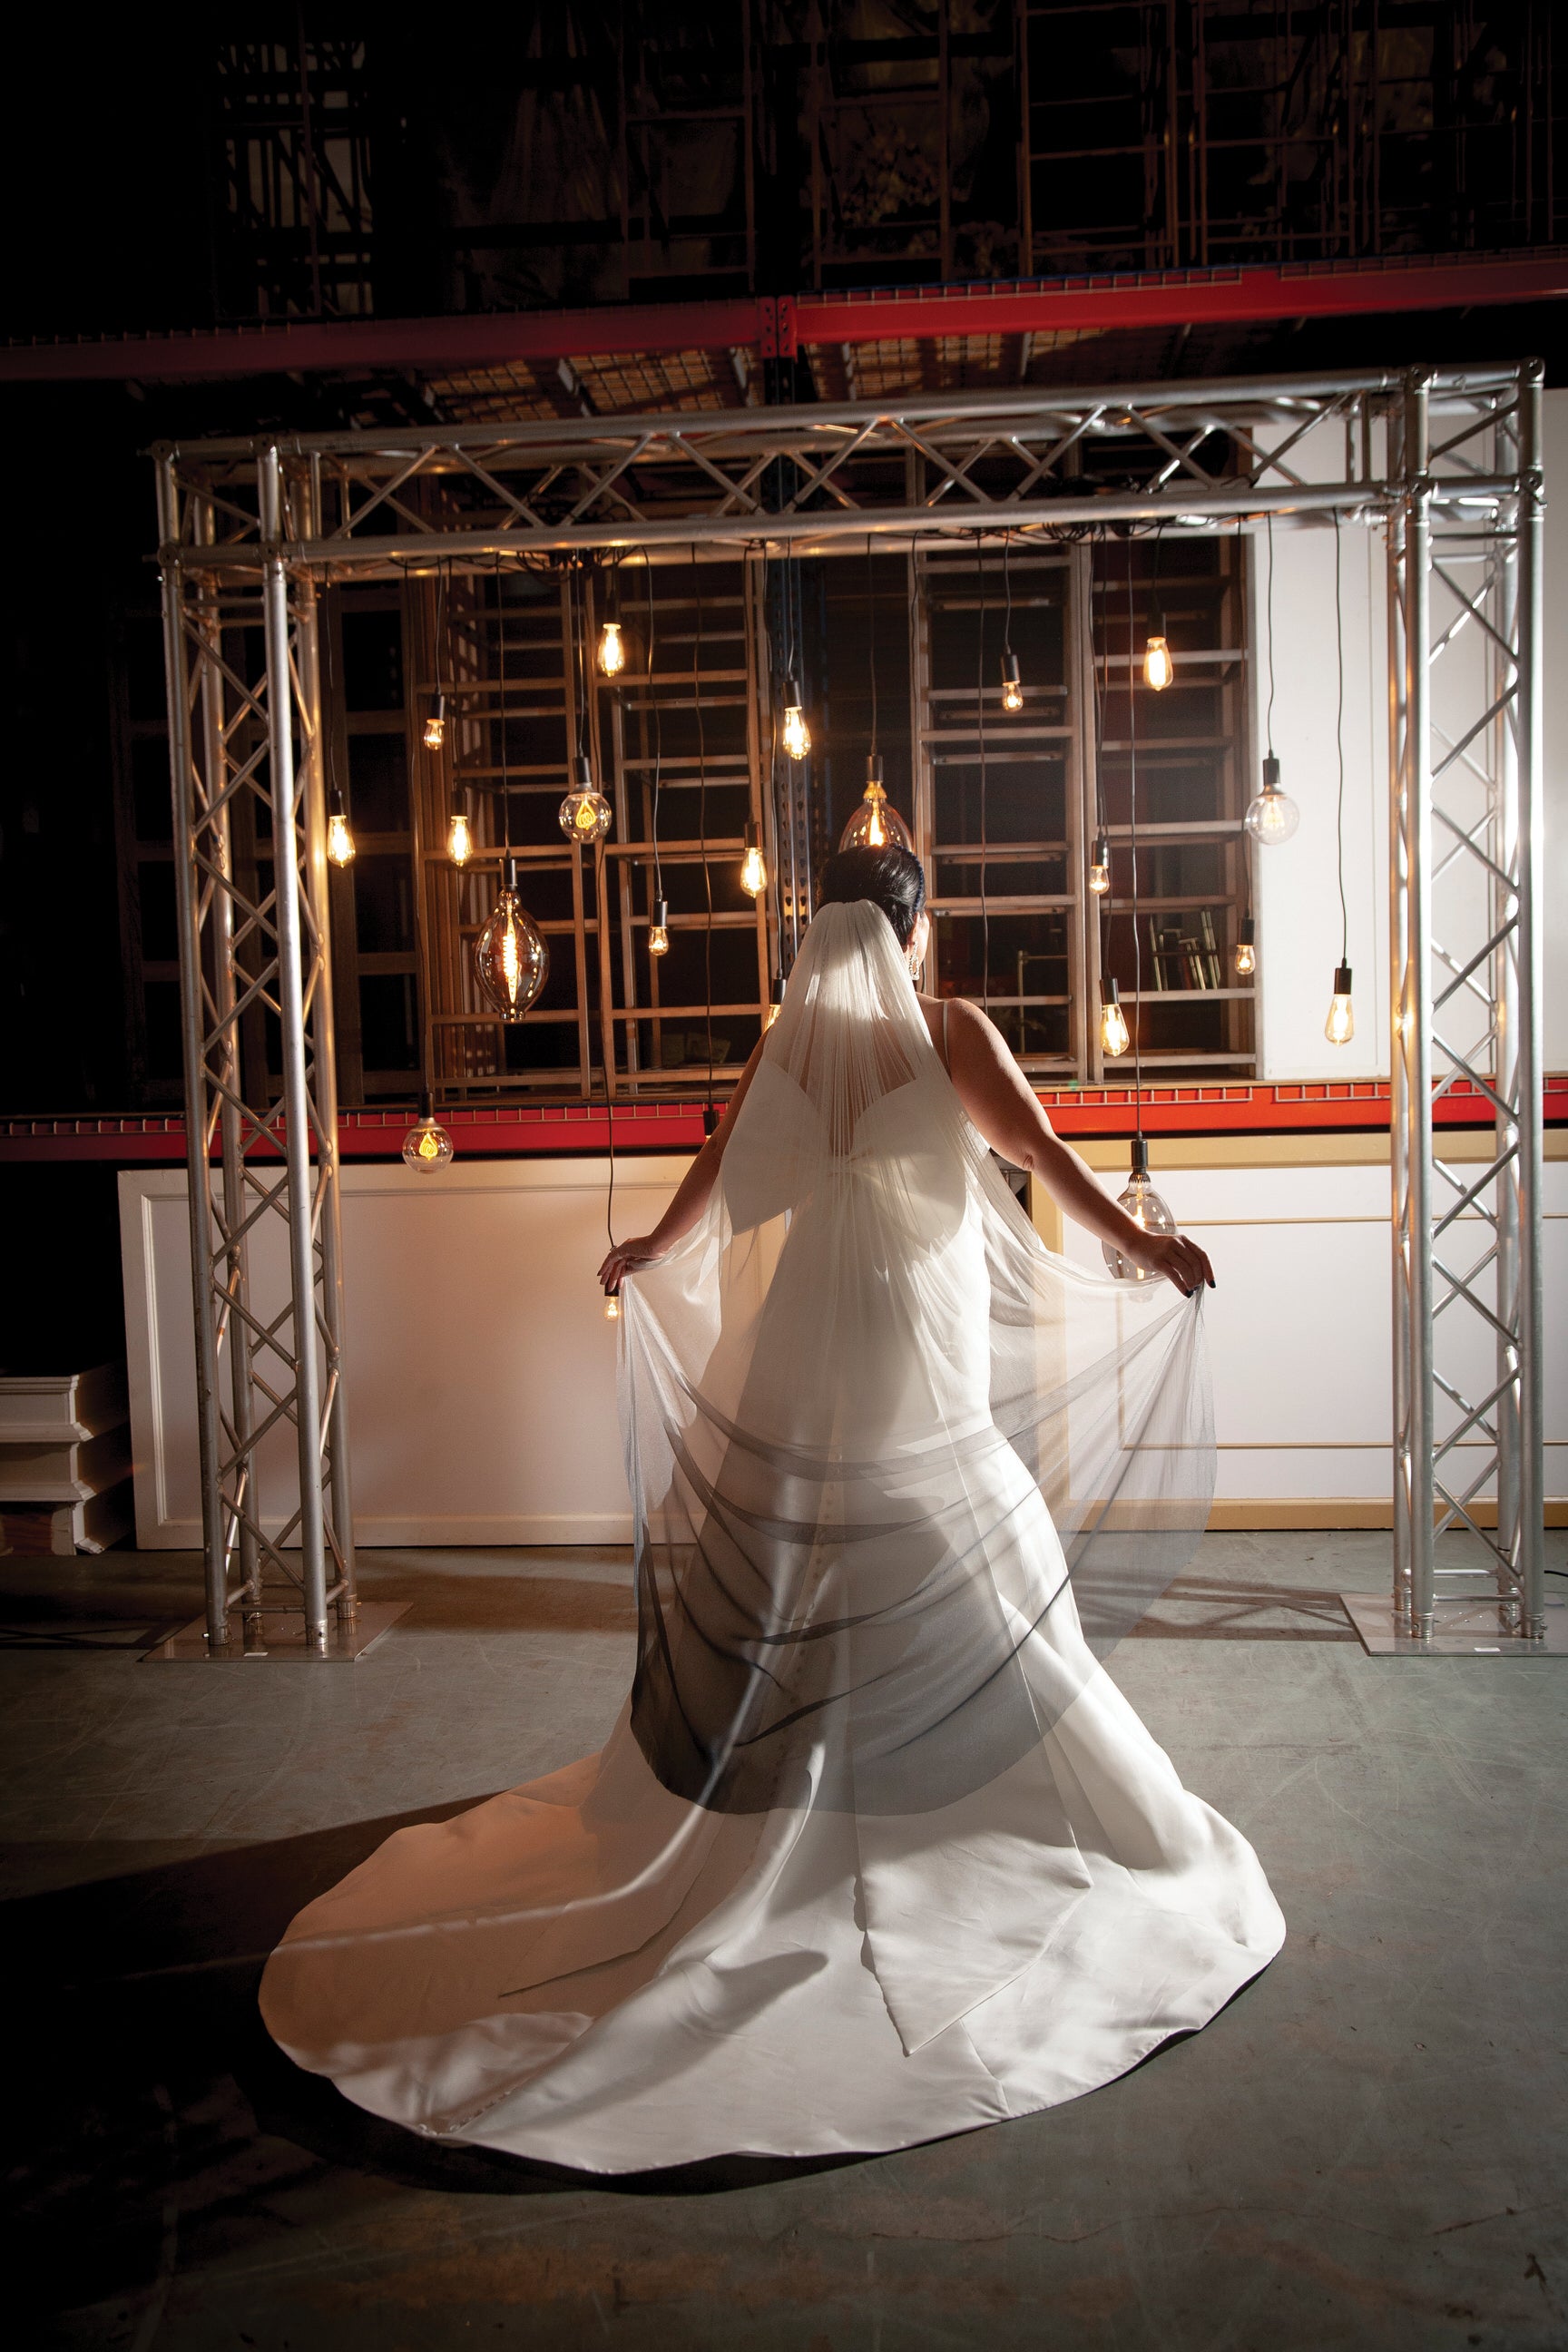  BEAUTELICATE Women's Wedding Hooded Cape Bridal Cloak